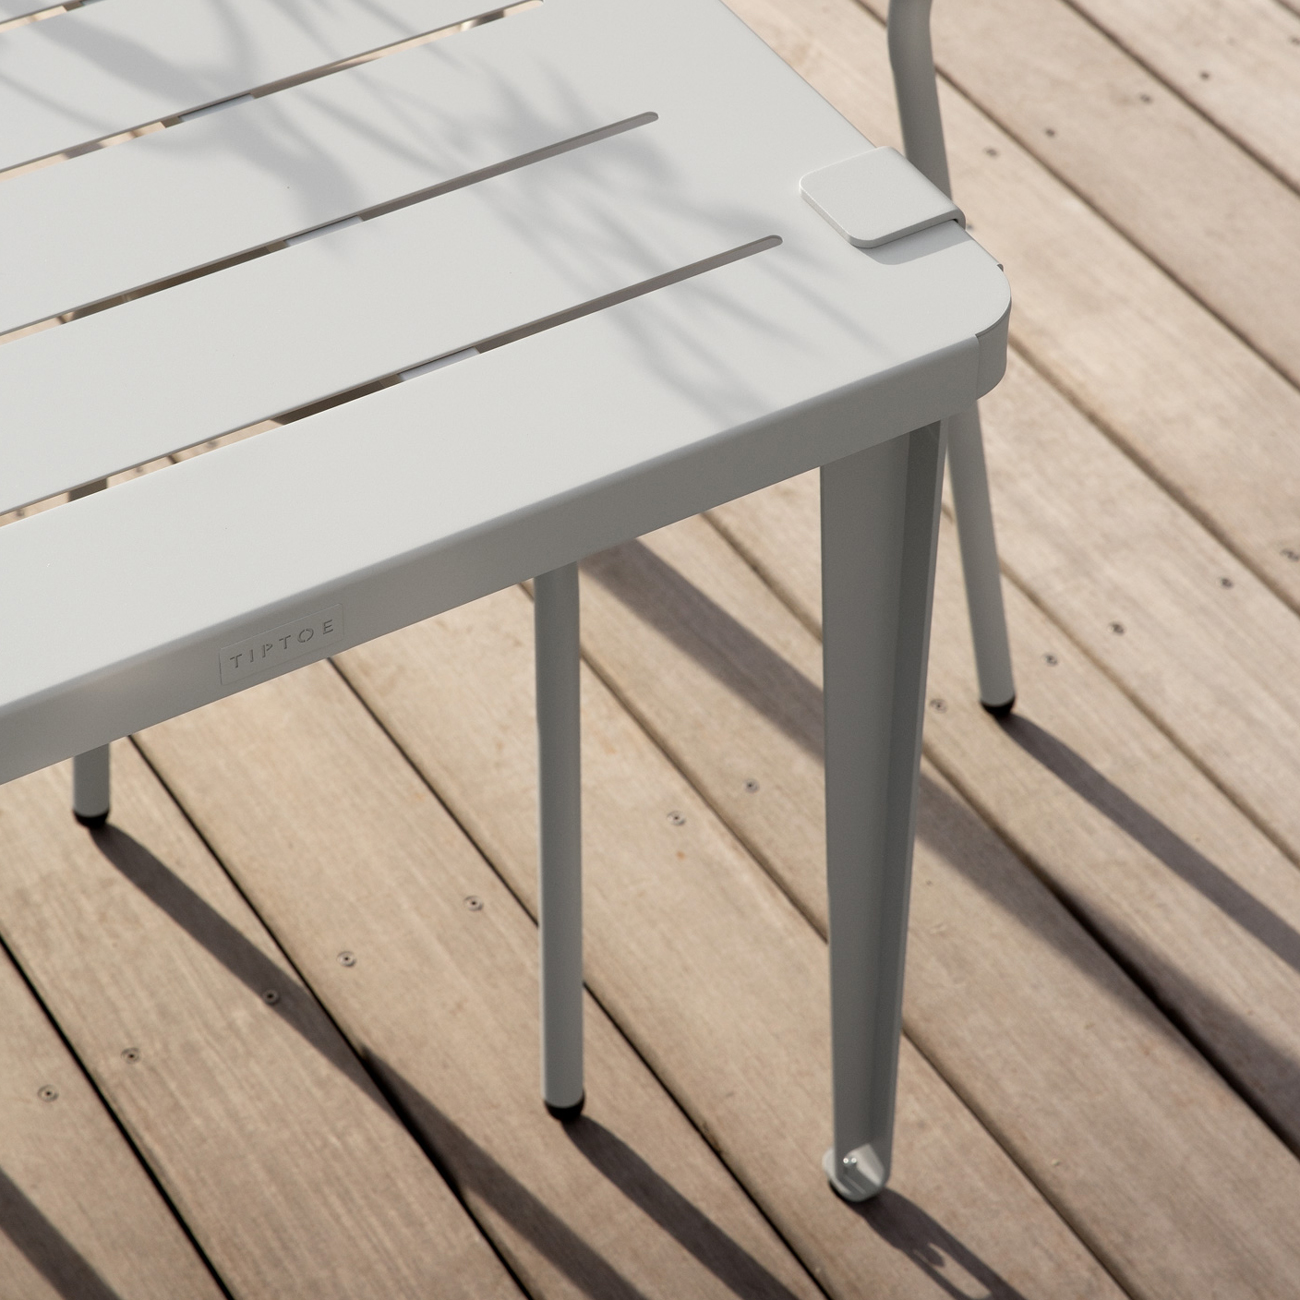 Outdoor table leg 75cm - MIDI collection